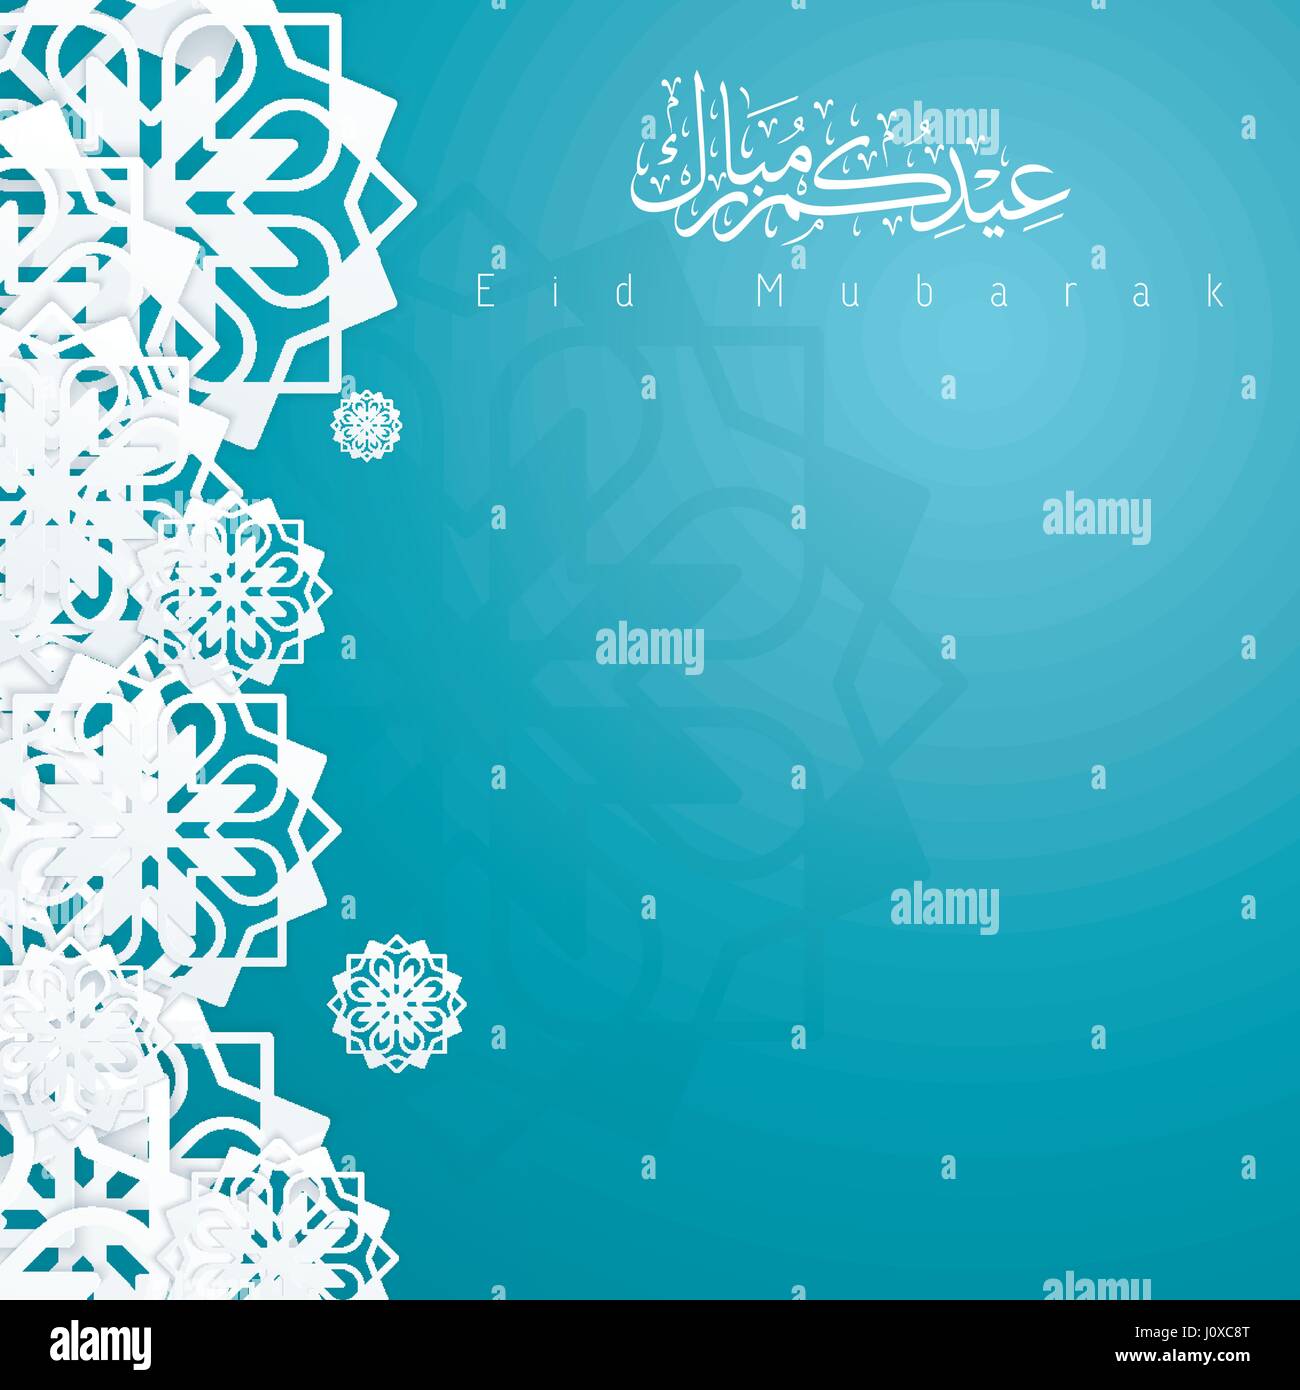 Eid Mubarak background design with arabic text and geometric